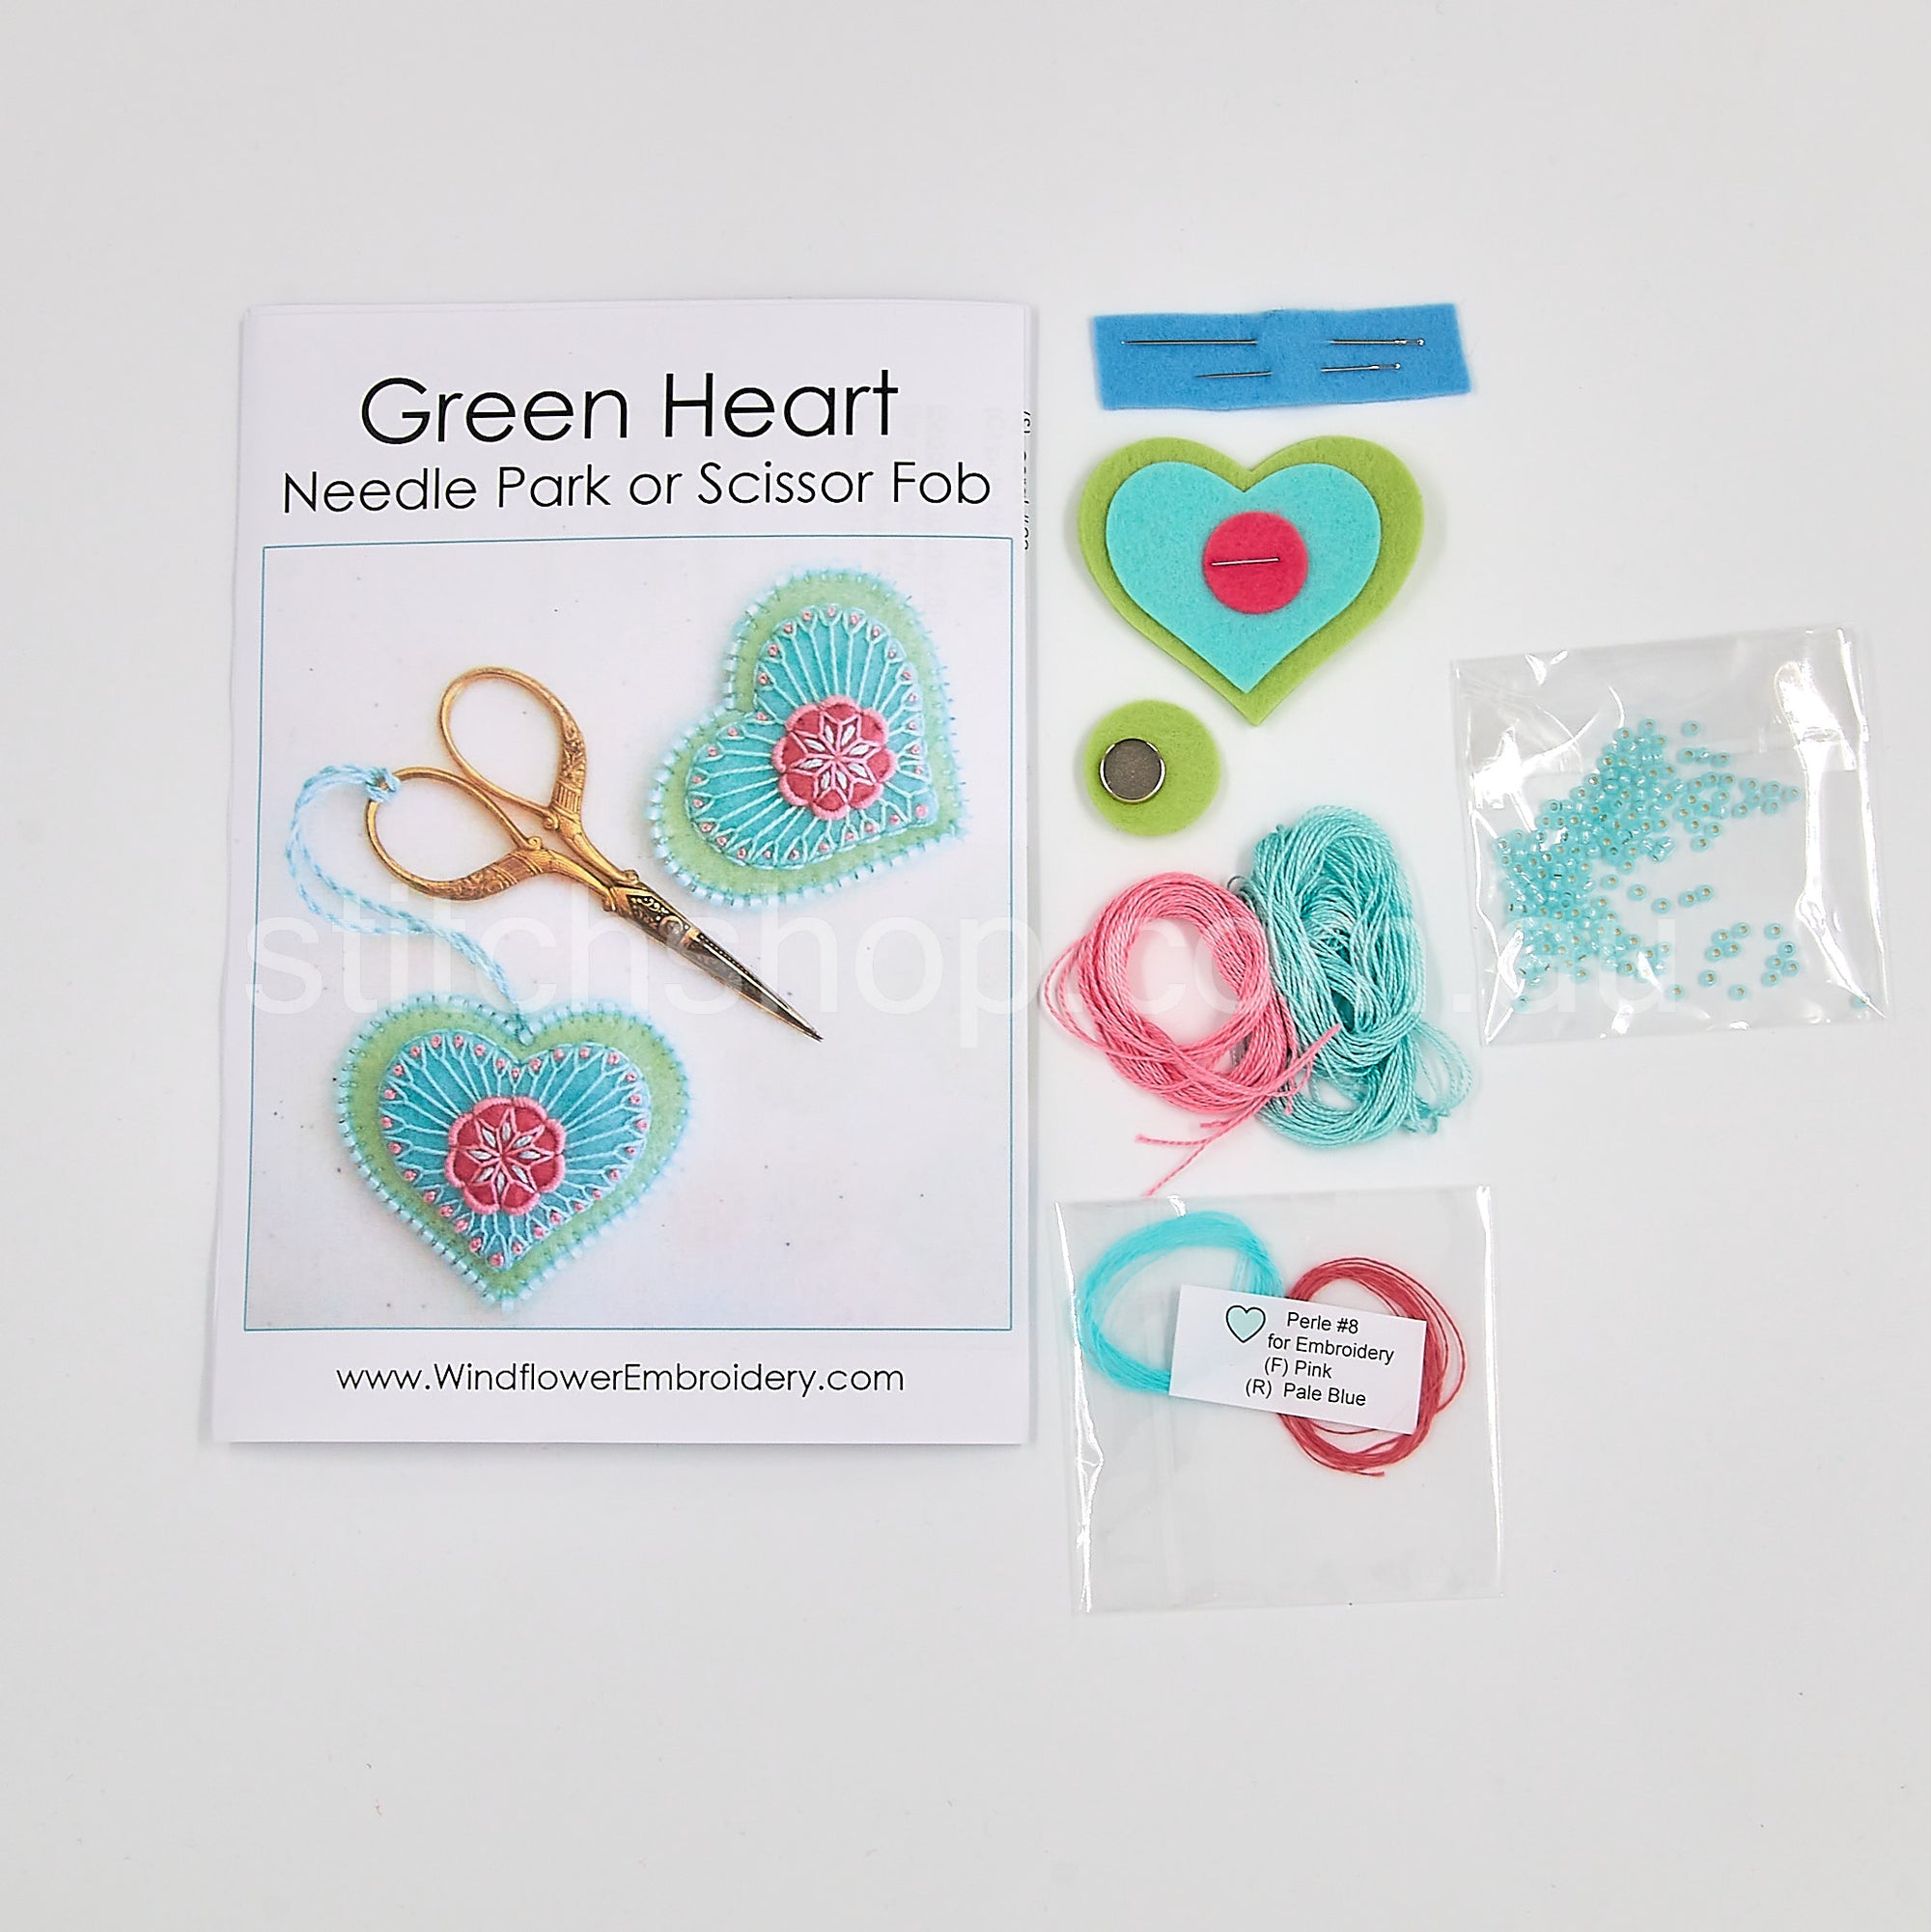 Green Heart Needle Park or Scissor Fob